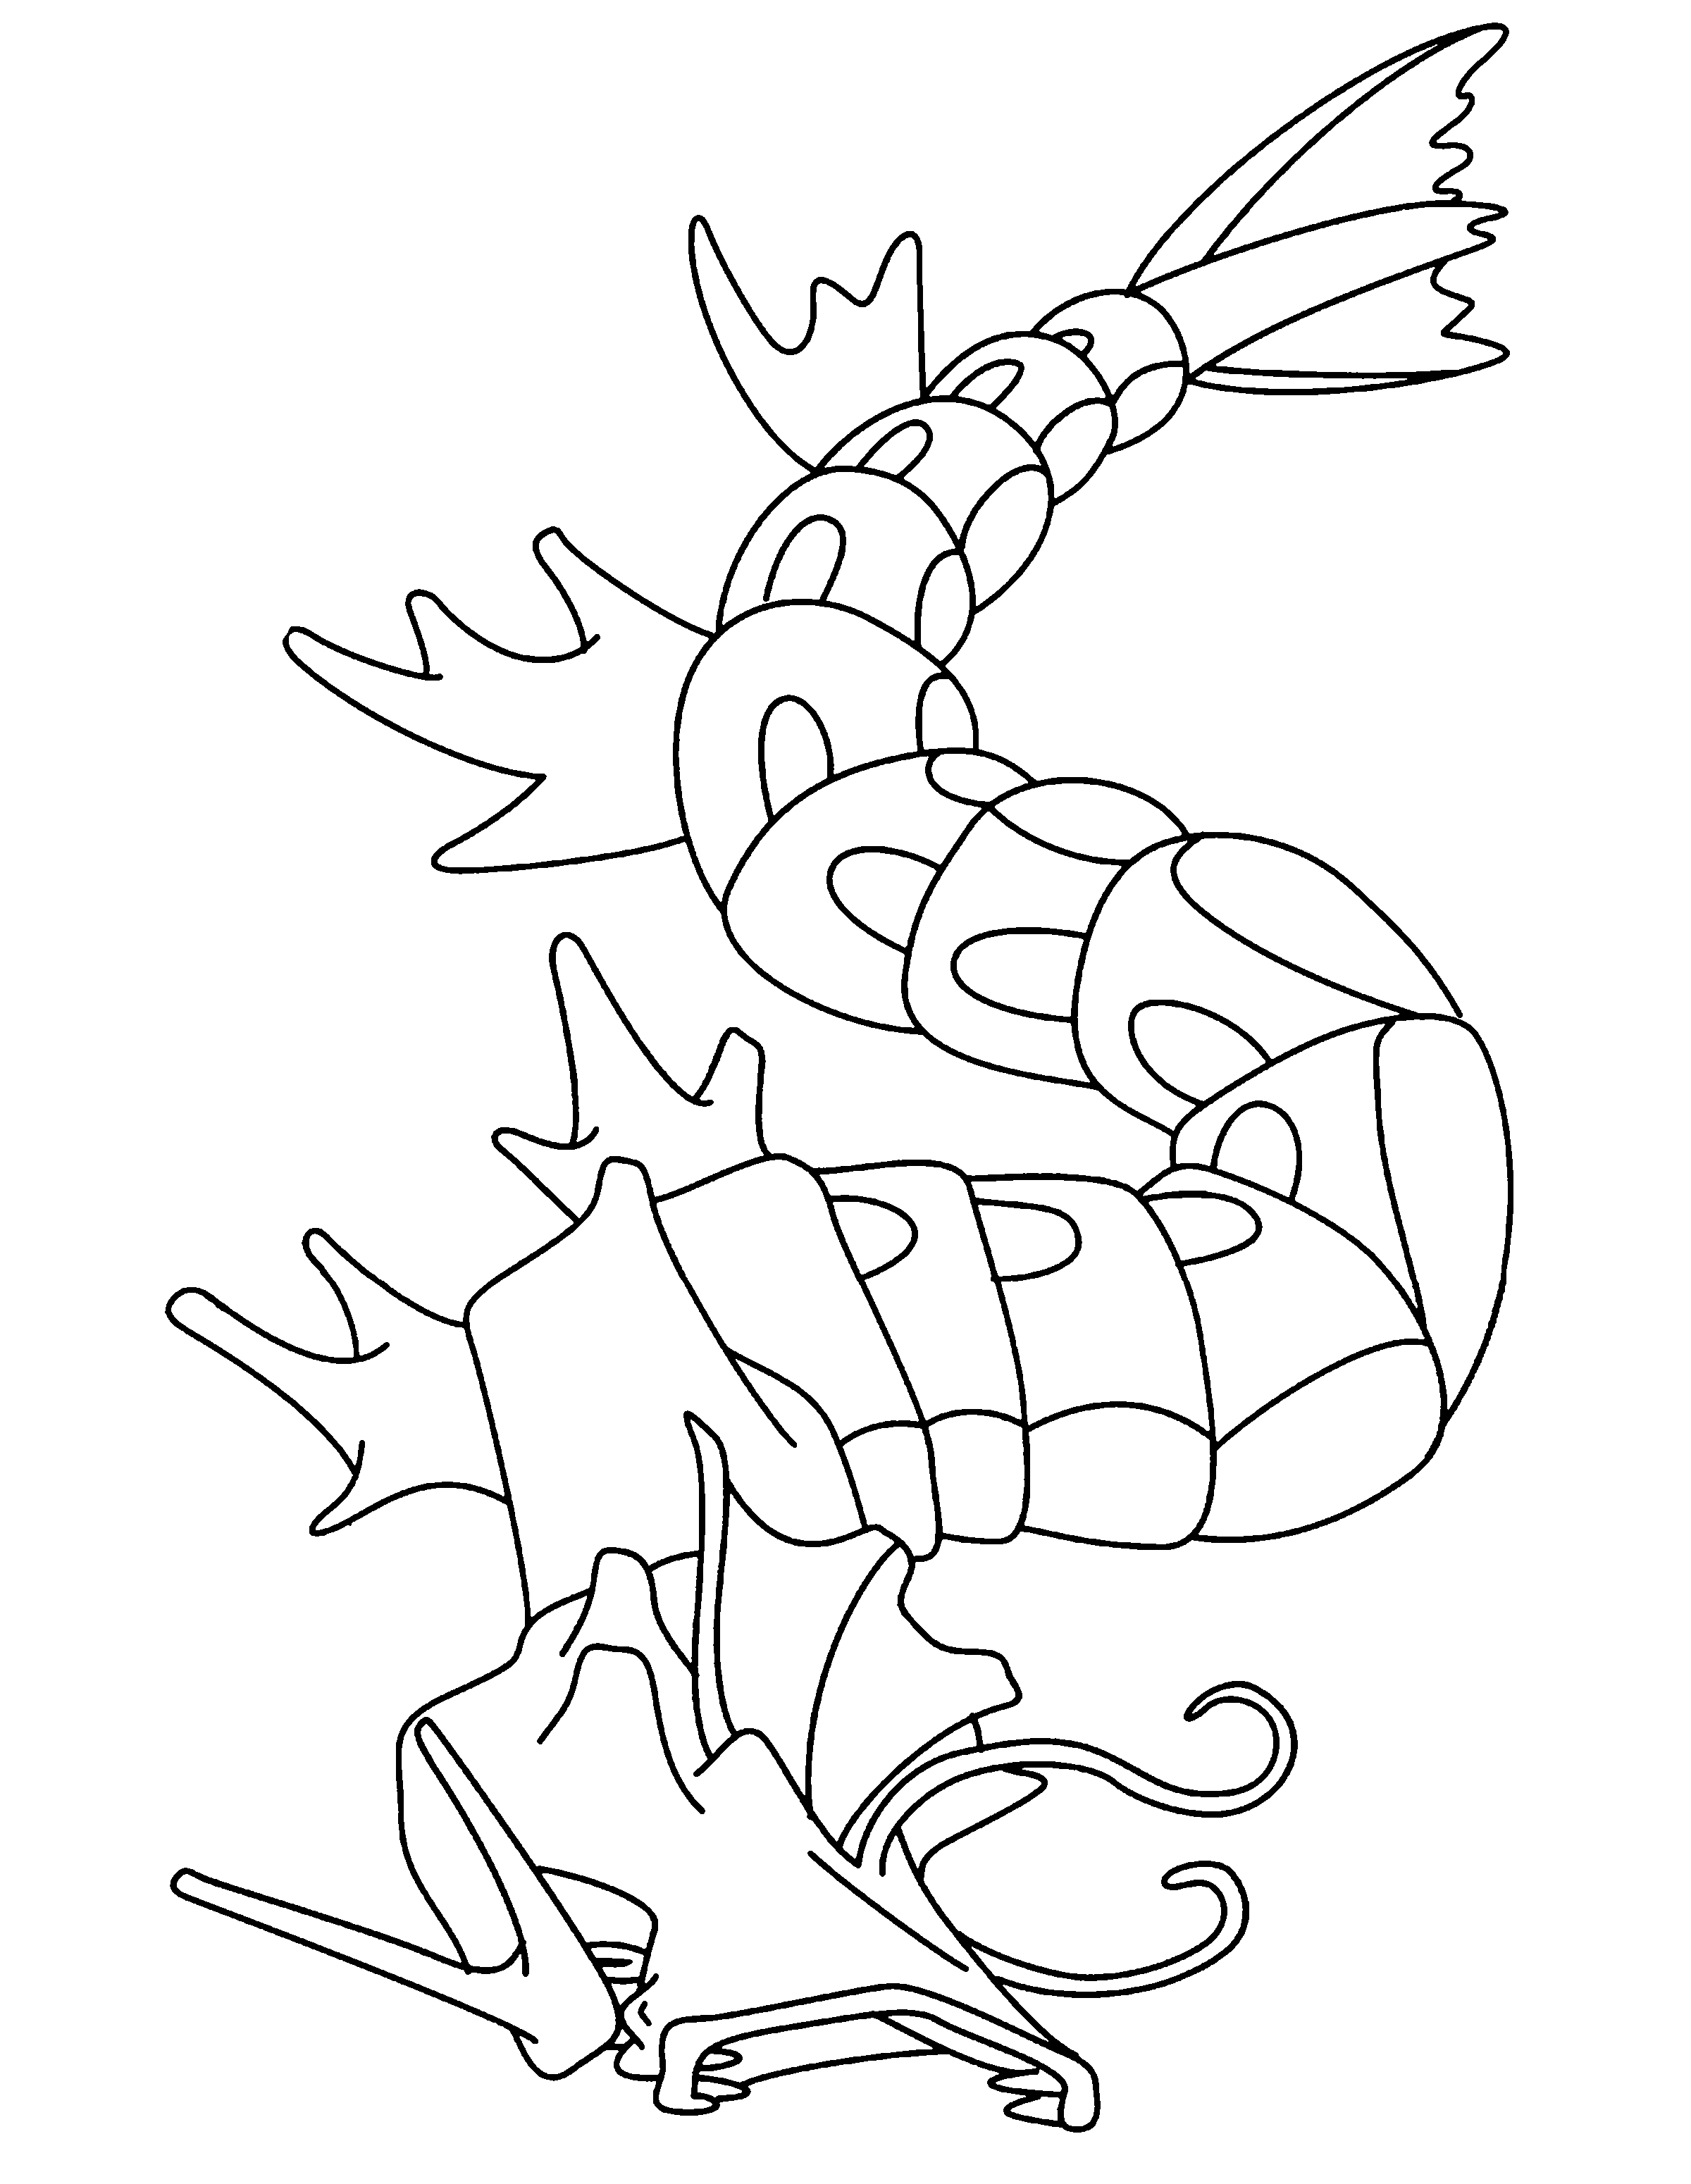 Pokemon Leviator coloring page